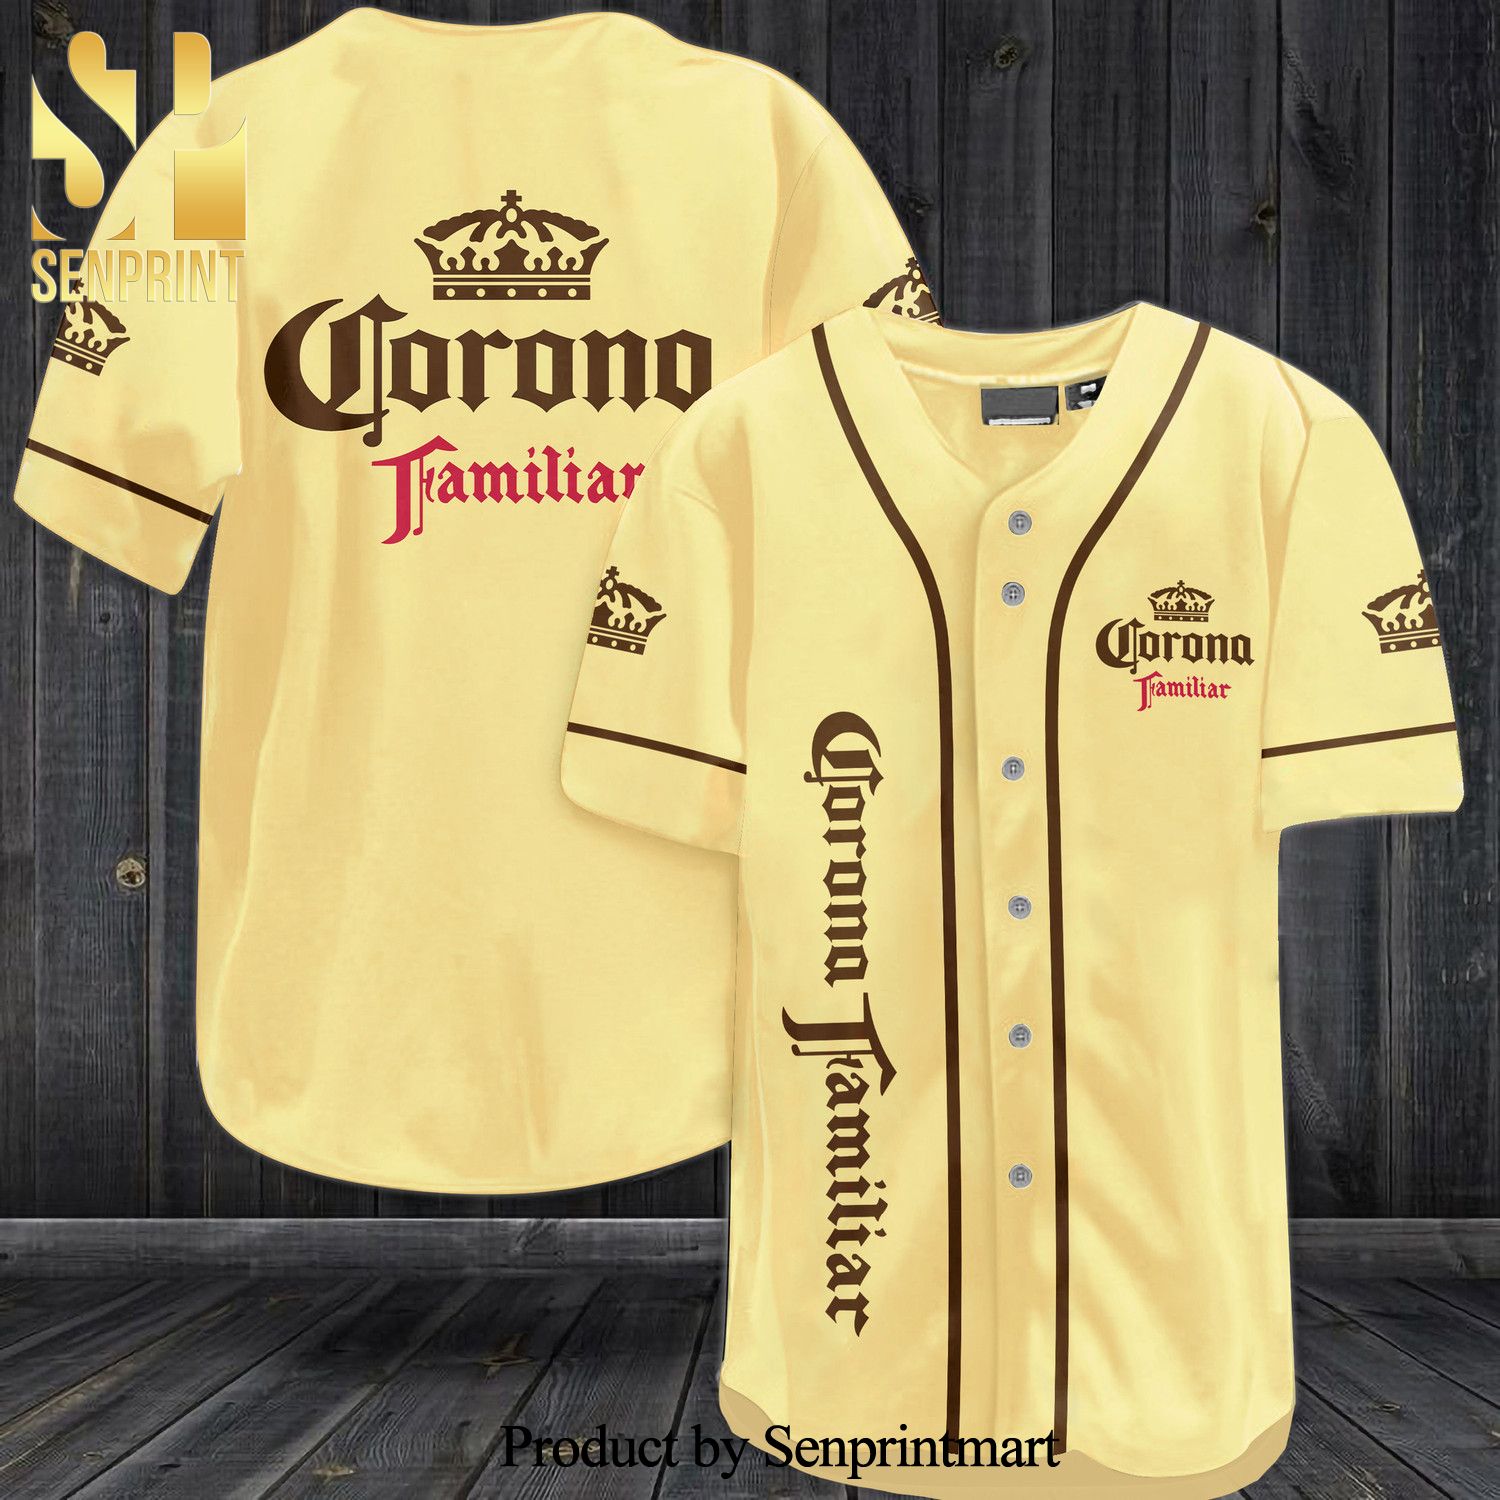 Corona Familiar Beer All Over Print Baseball Jersey – Beige